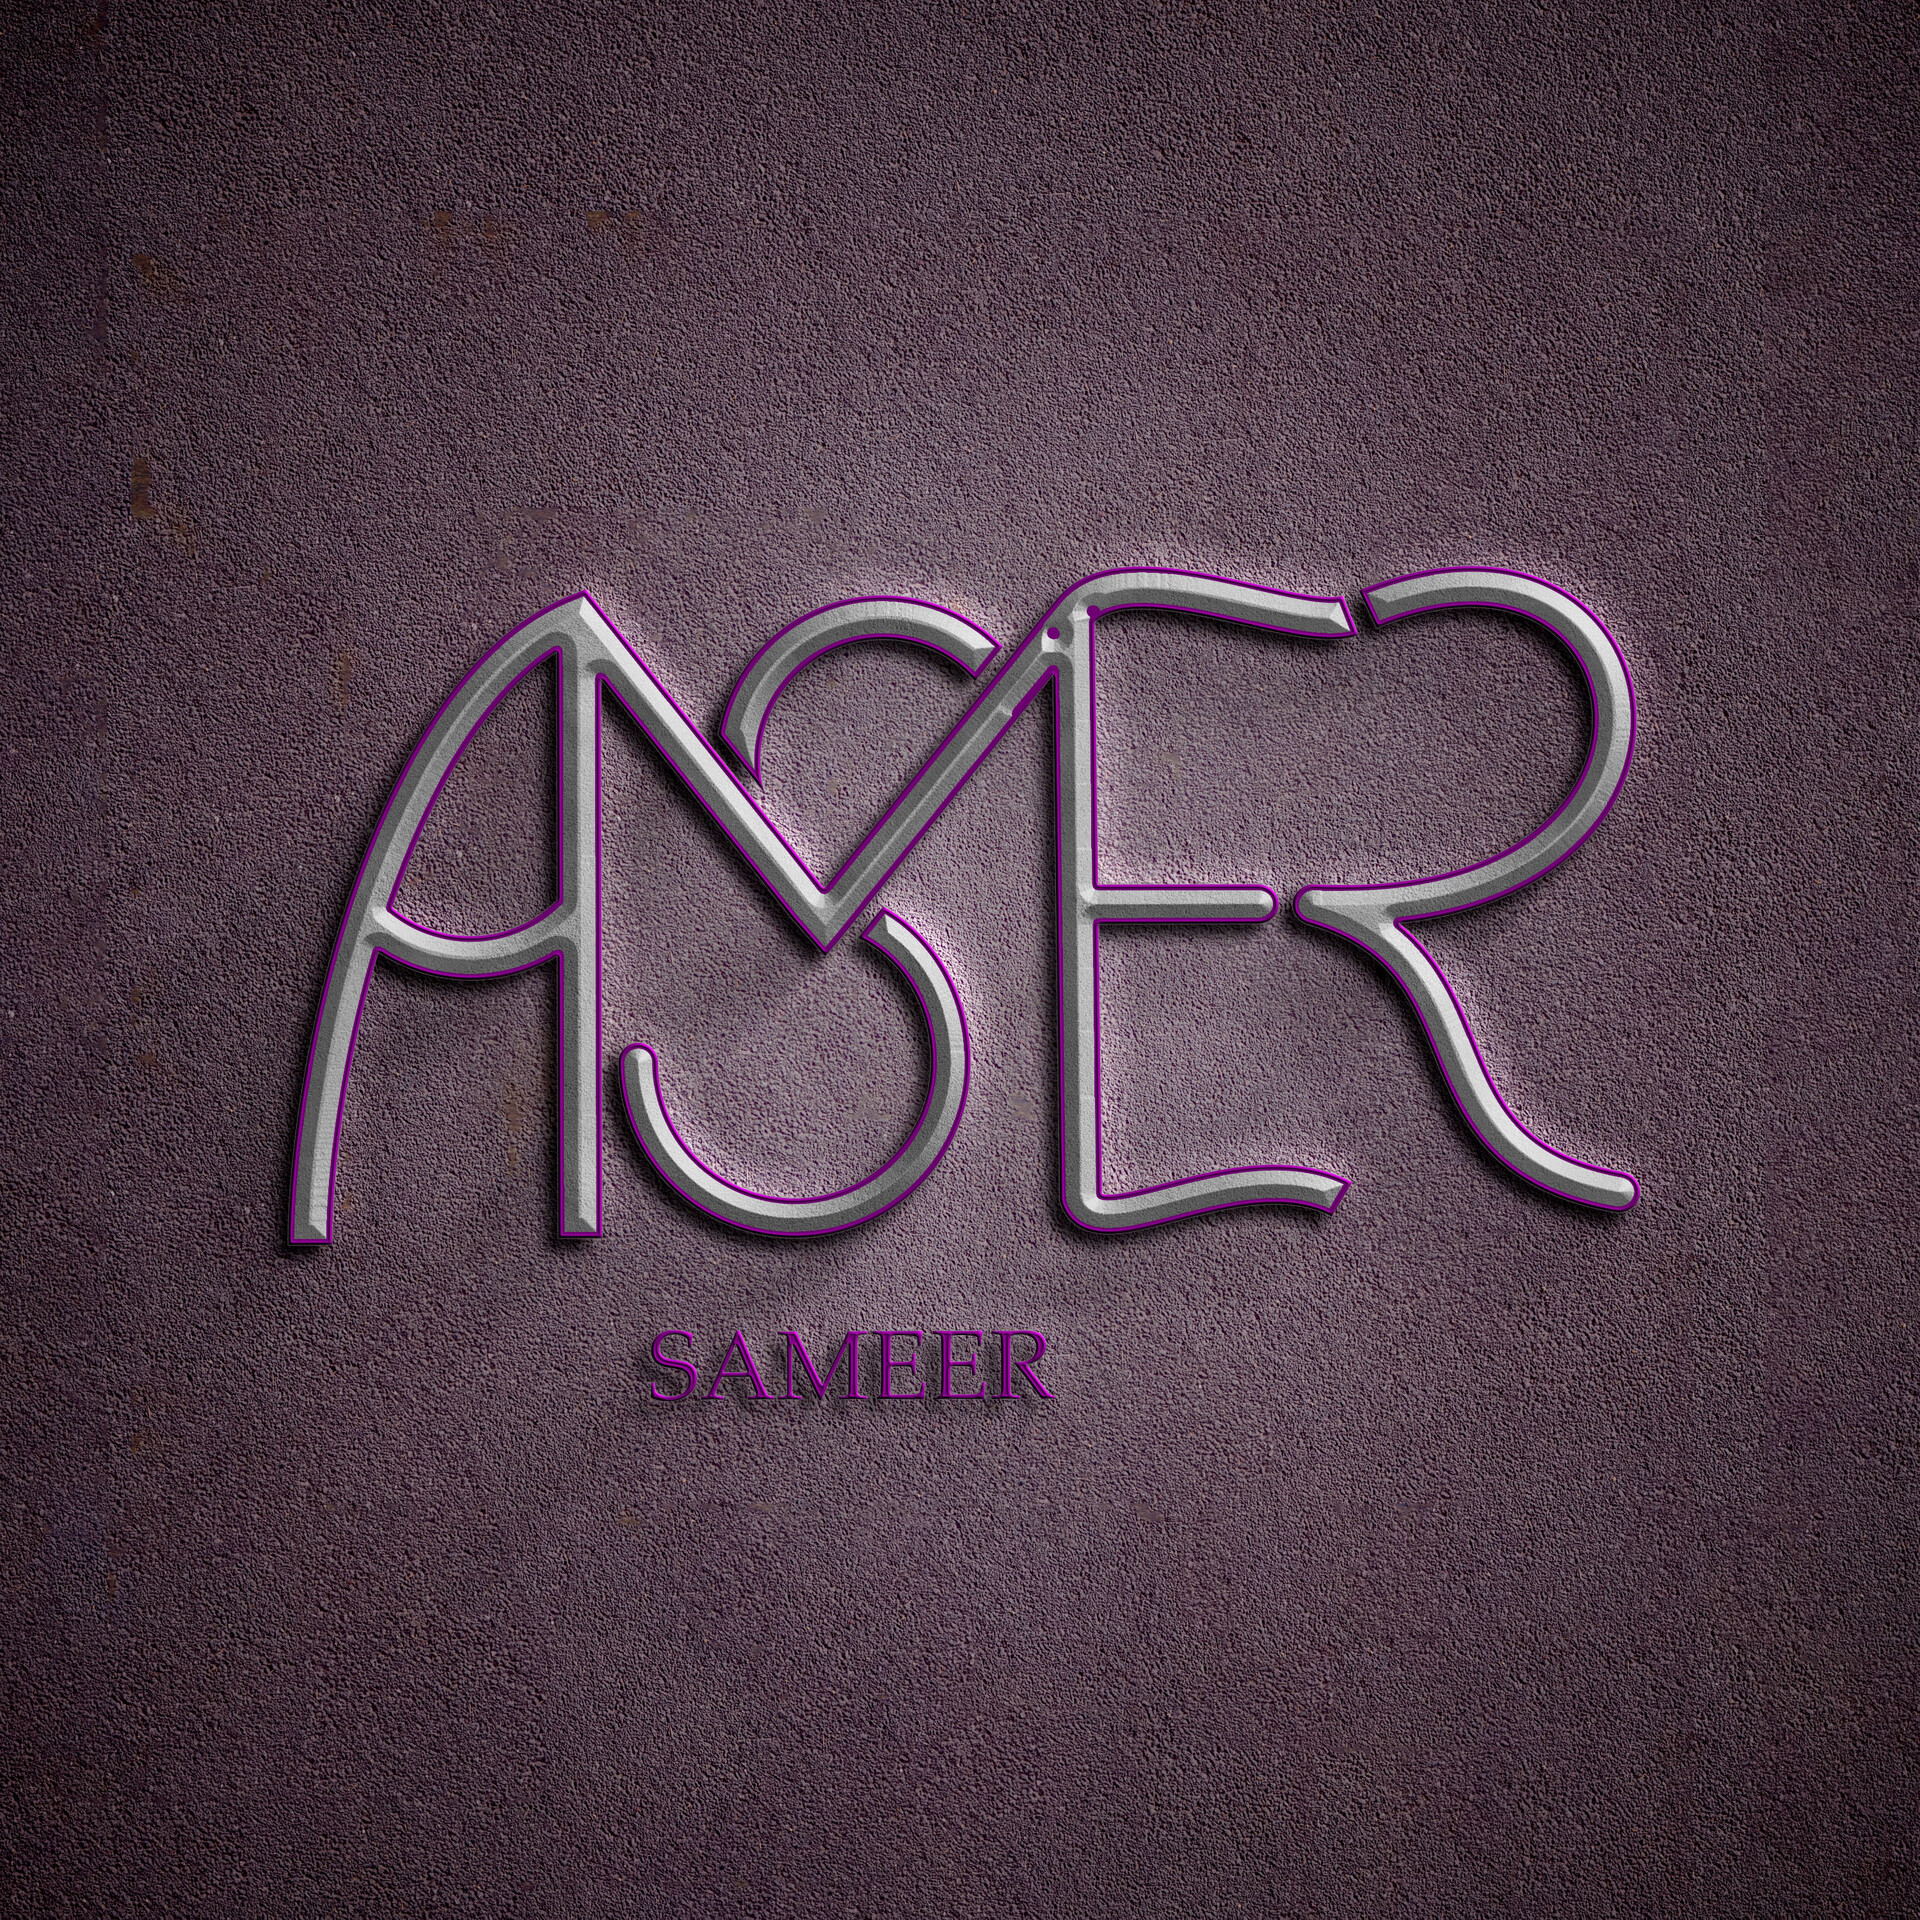 sameer name logo